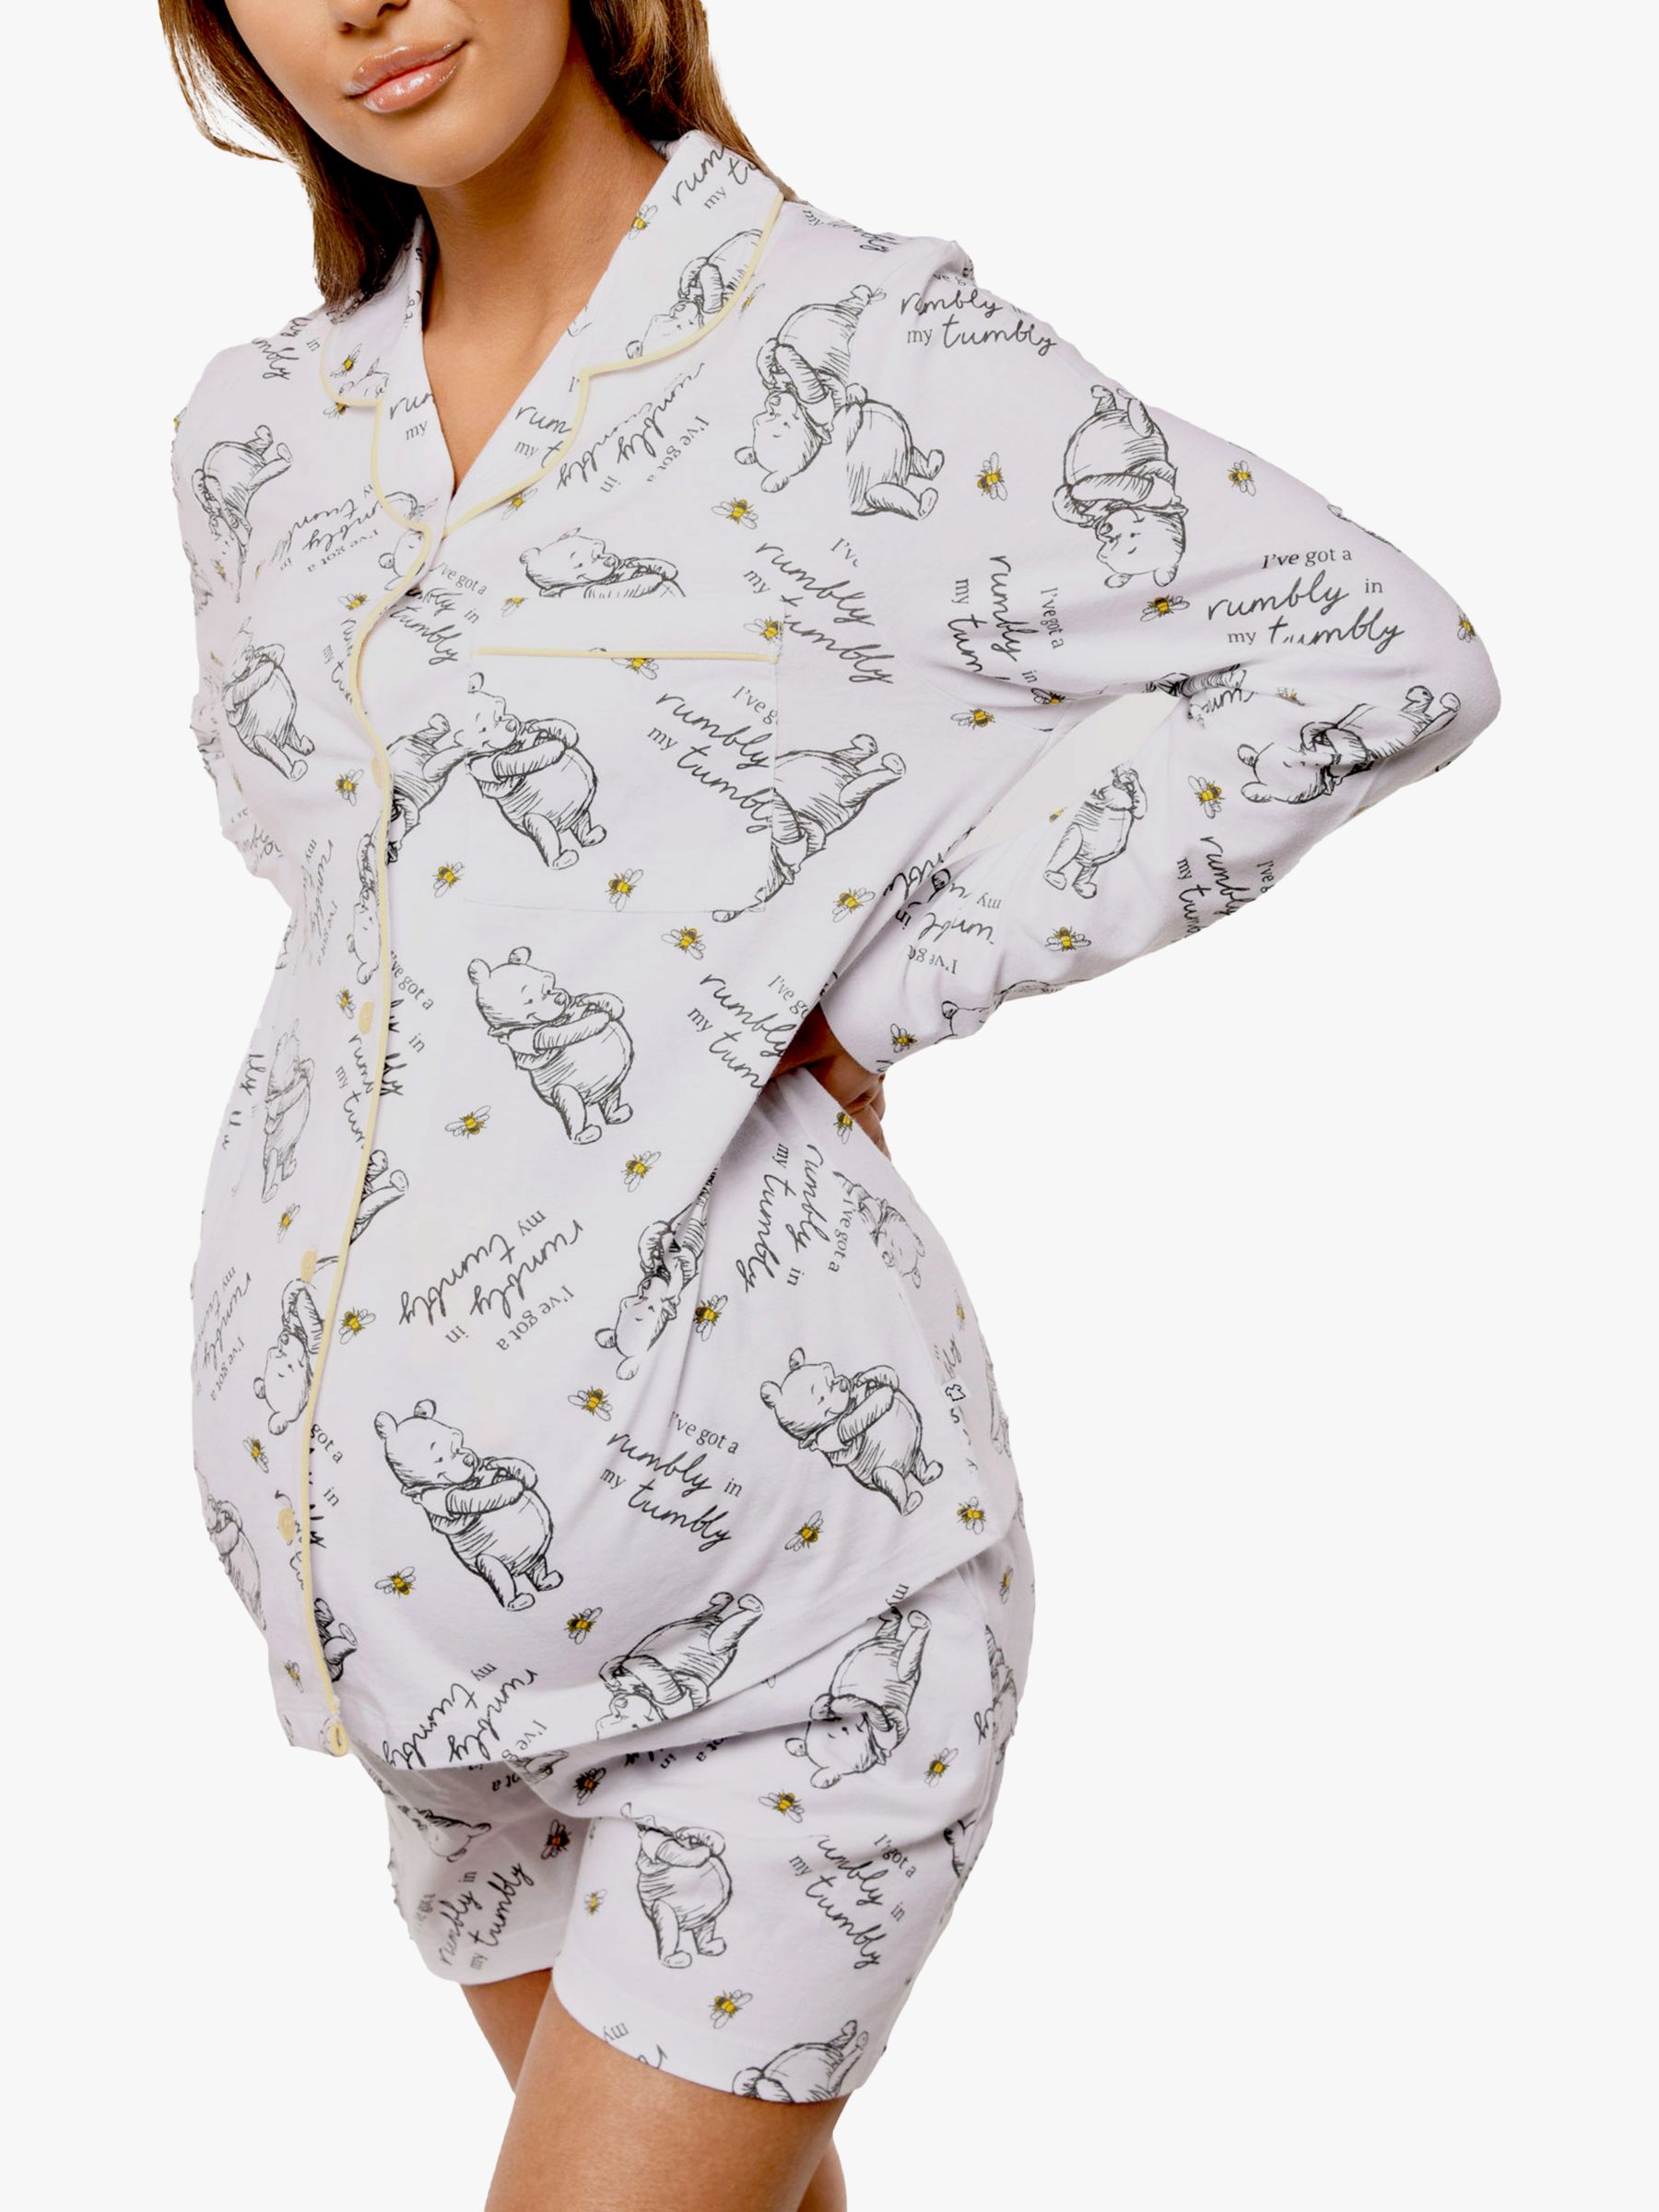 Brand Threads Maternity Winnie the Pooh Pyjama Set, White, XS